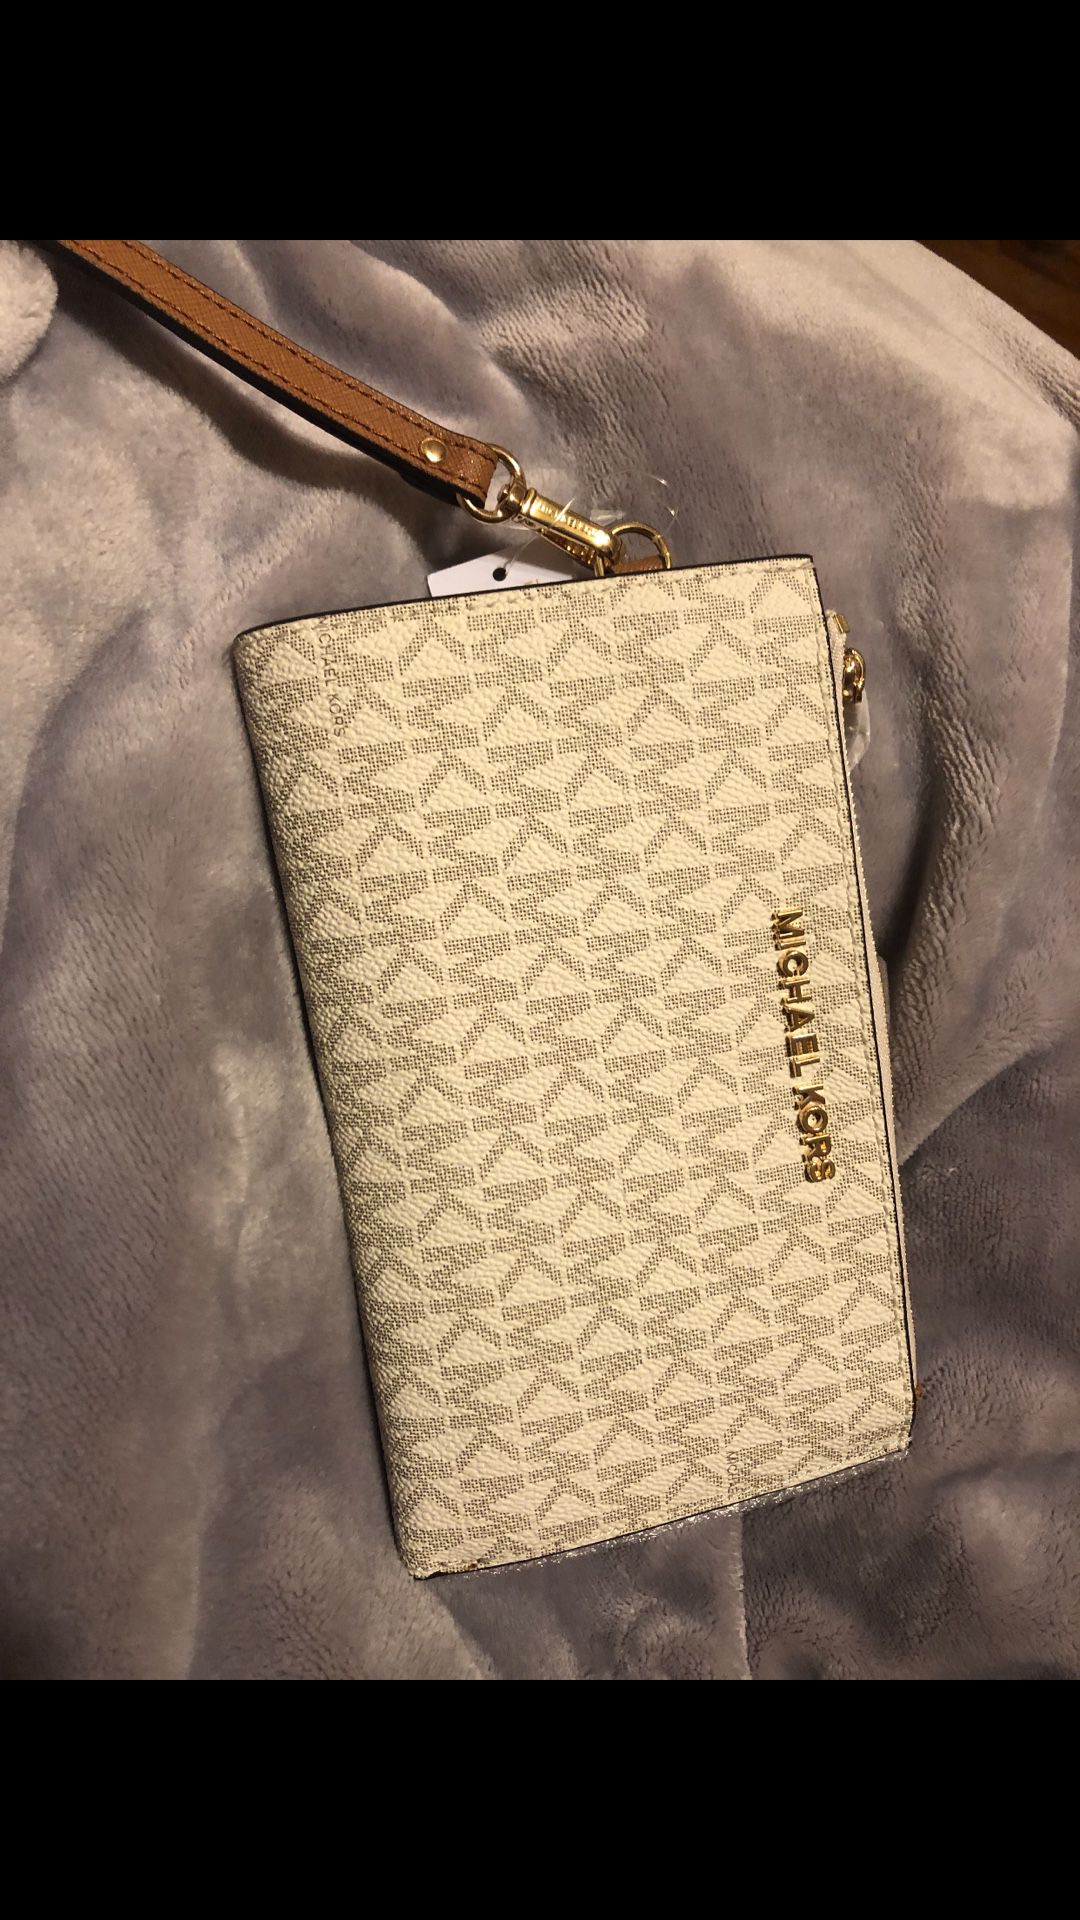 MK wallet (new) $80